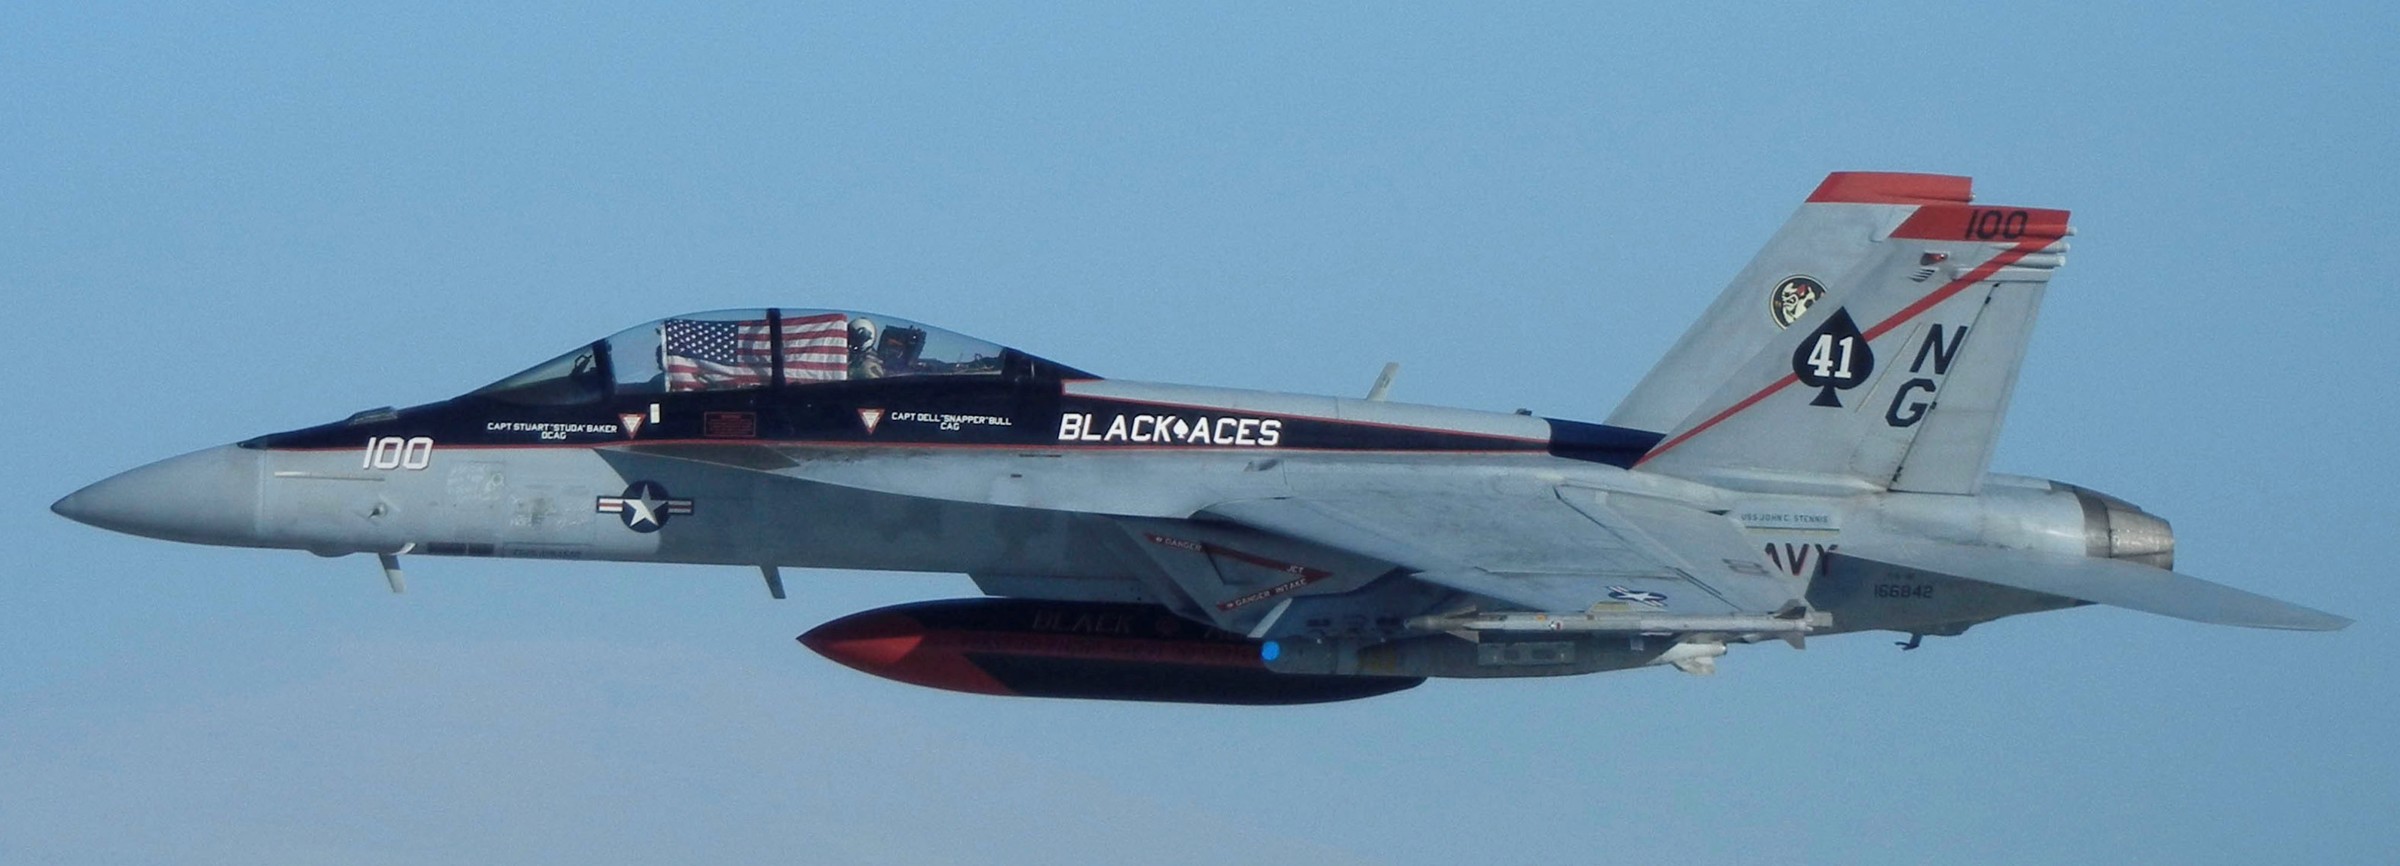 vfa-41 black aces strike fighter squadron f/a-18f super hornet cvw-9 cvn-70 uss john c. stennis us navy 84